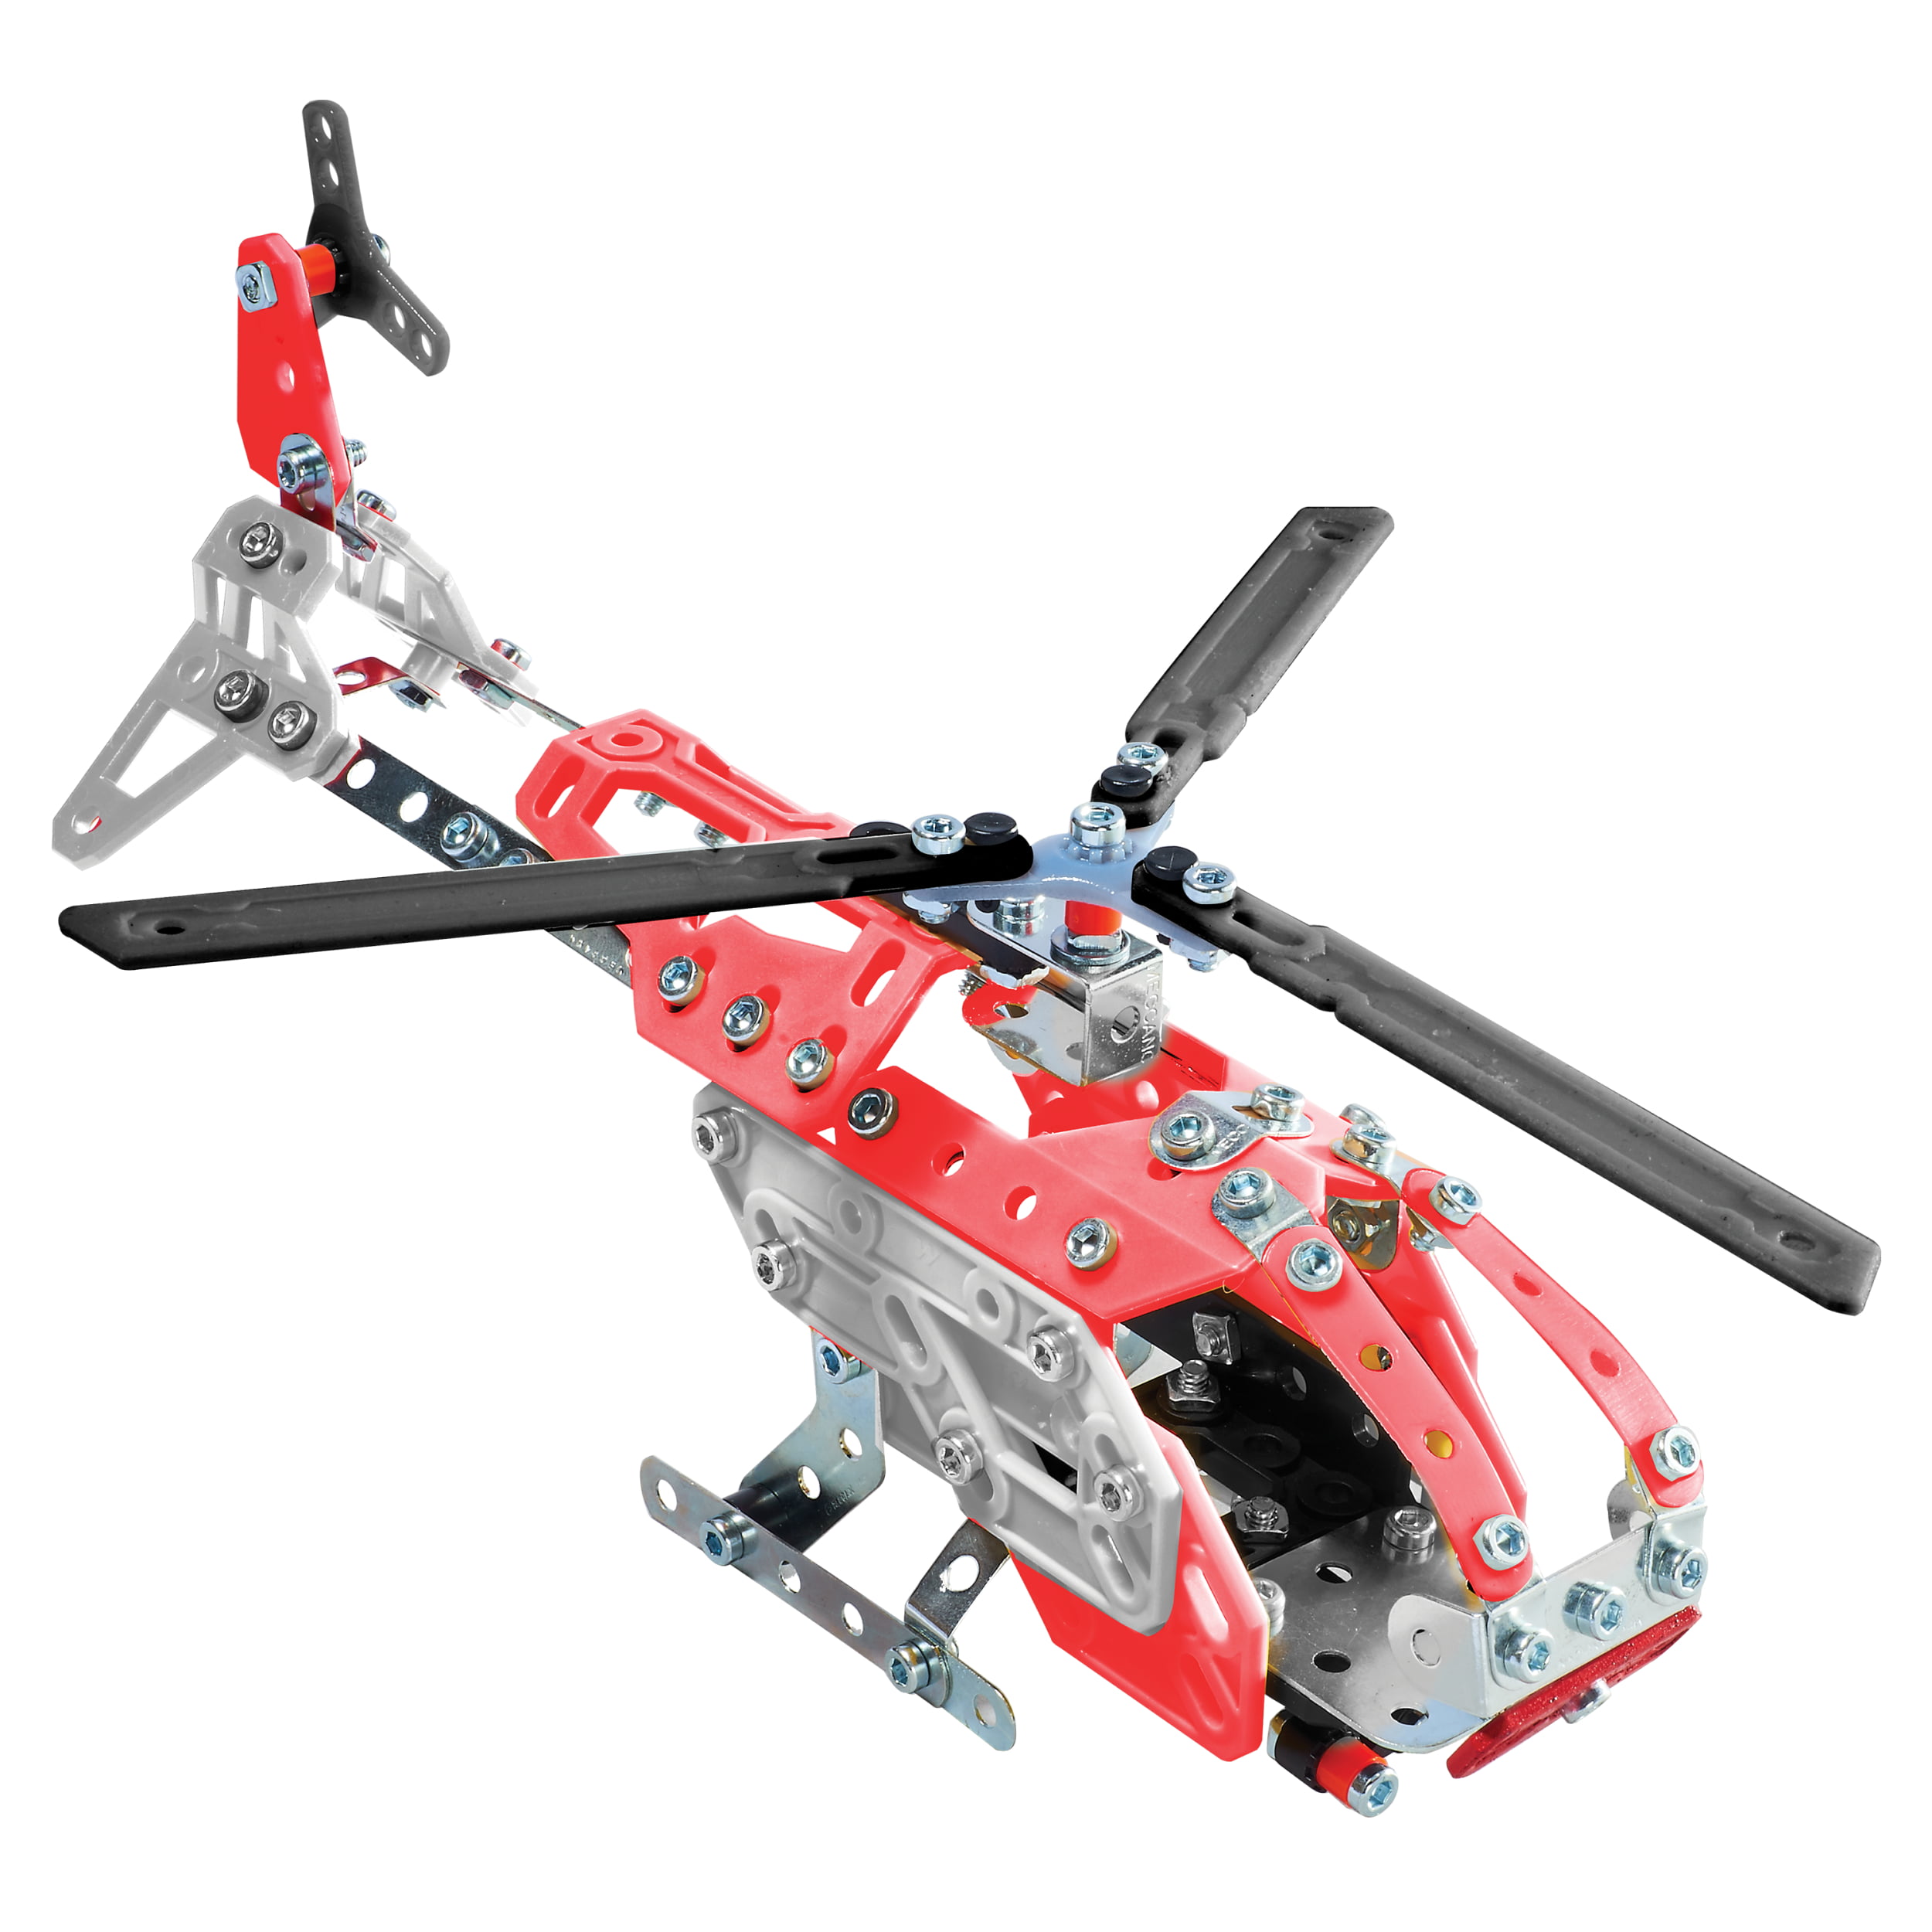 6 Race Car Bundle Bulldozer Car SMaster Meccano Erector Building Set of Bi-Plane - Miniature Plane Helicopter